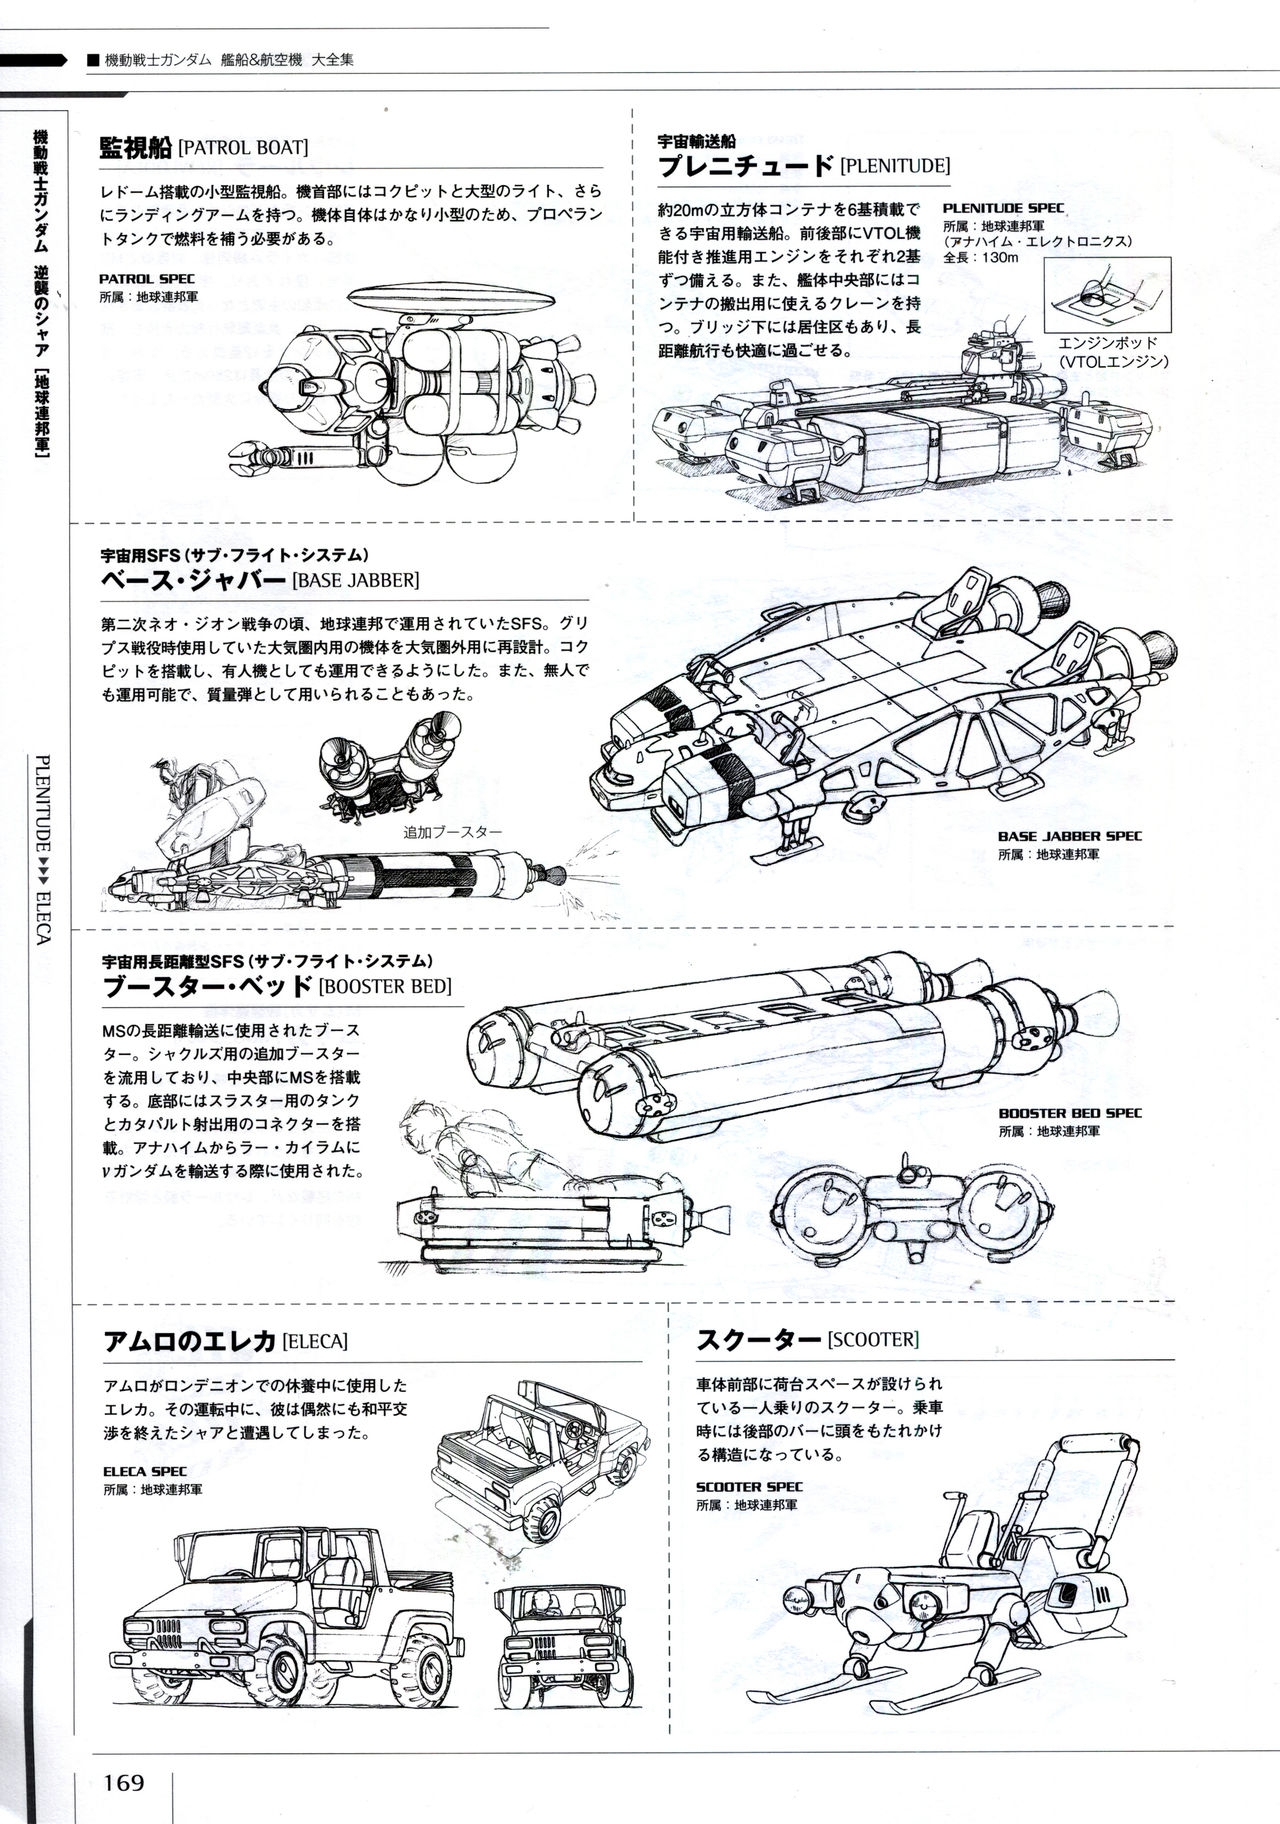 Mobile Suit Gundam - Ship & Aerospace Plane Encyclopedia - Revised Edition 174